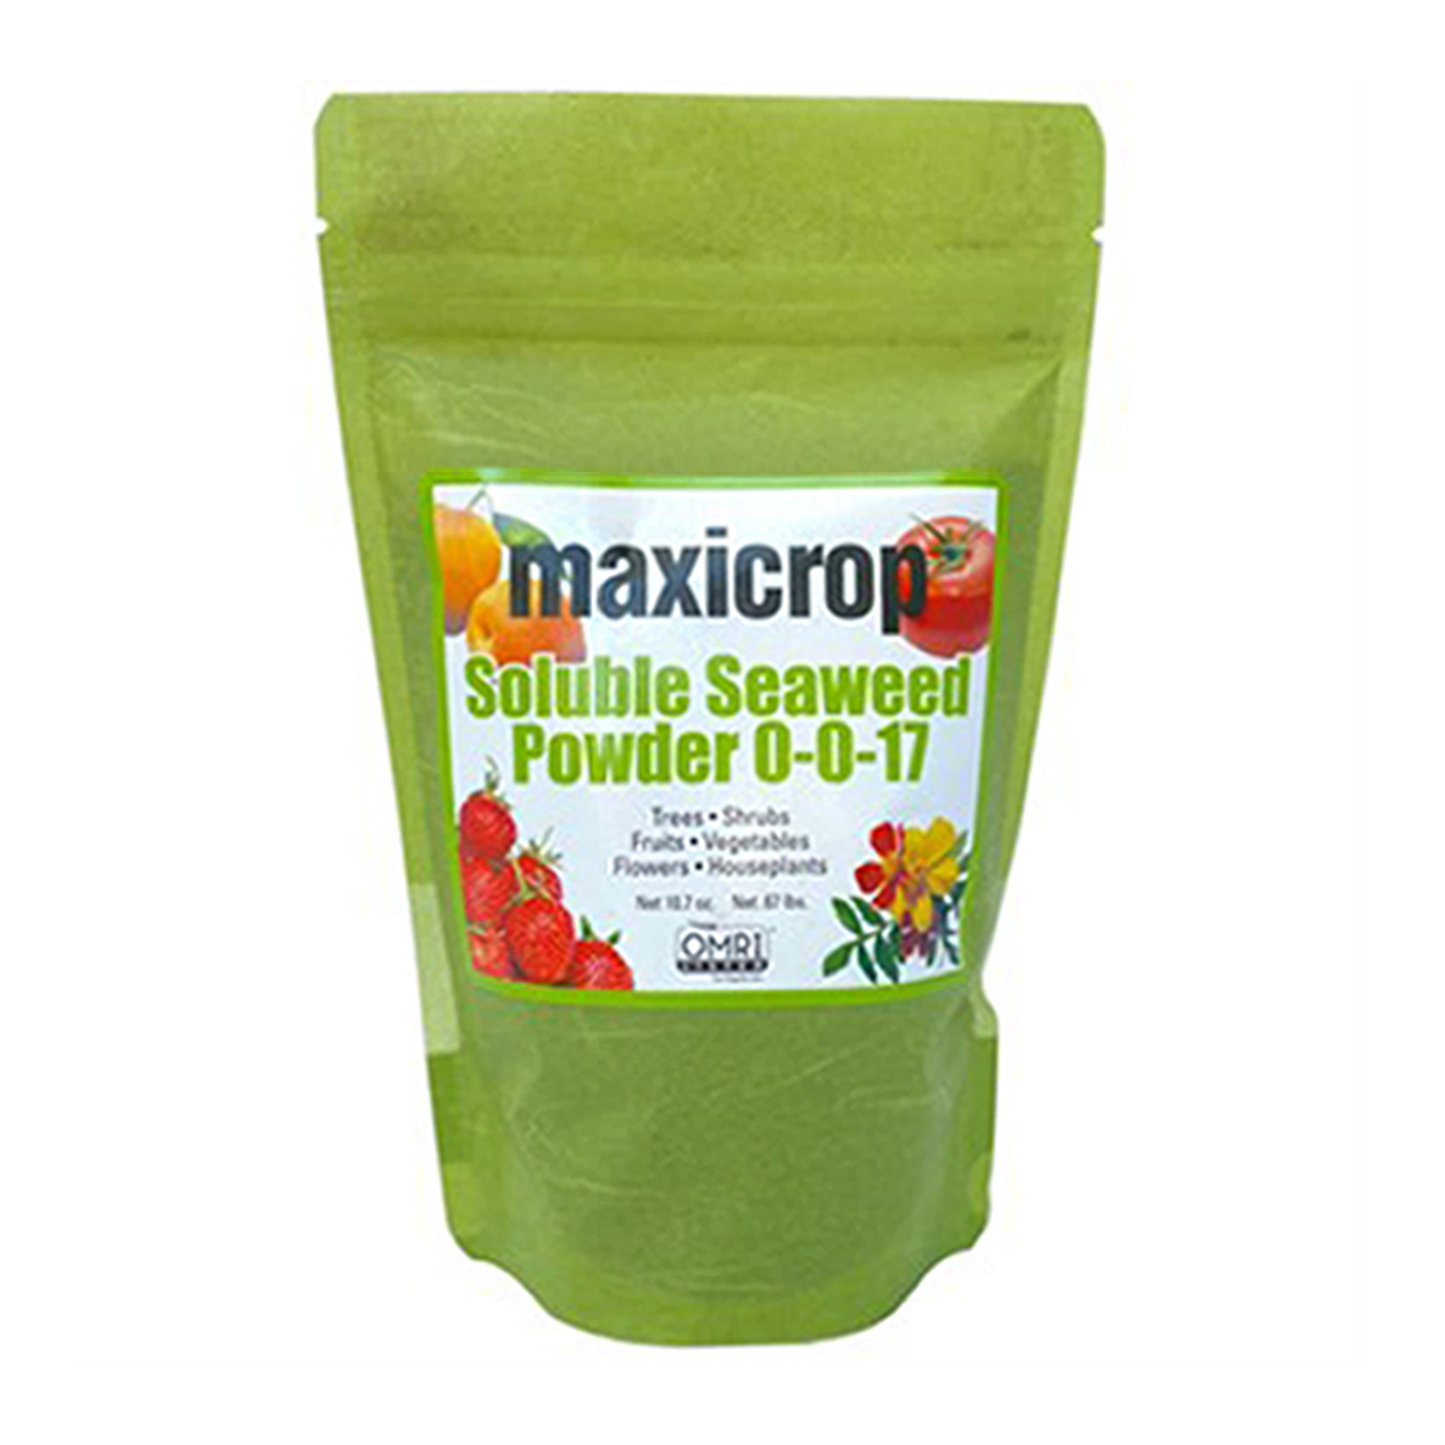 Maxicrop Soluble Seaweed Powder 0-0-17 - 10.7oz - OMRI Listed® (CLOSEOUT)